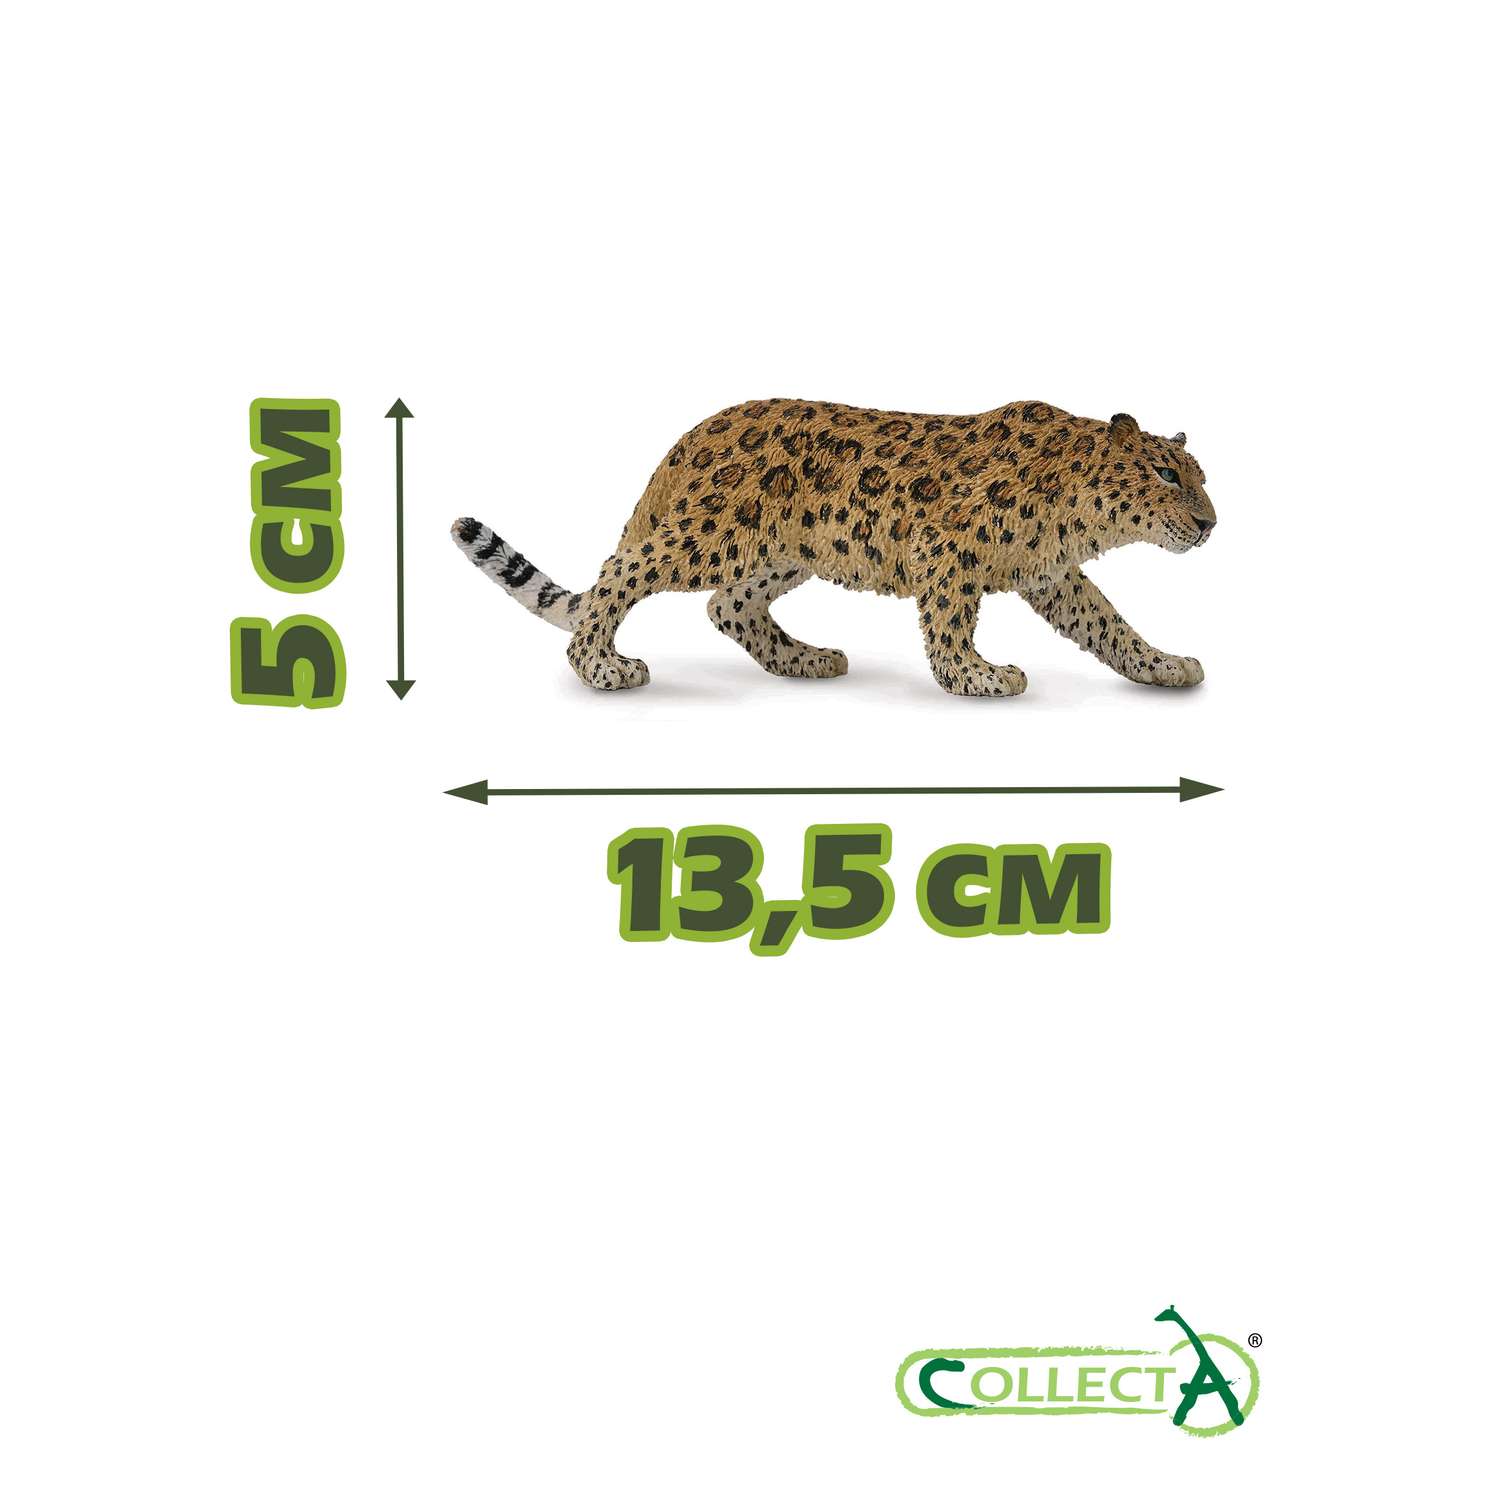 Фигурка животного Collecta Амурский леопард - фото 2